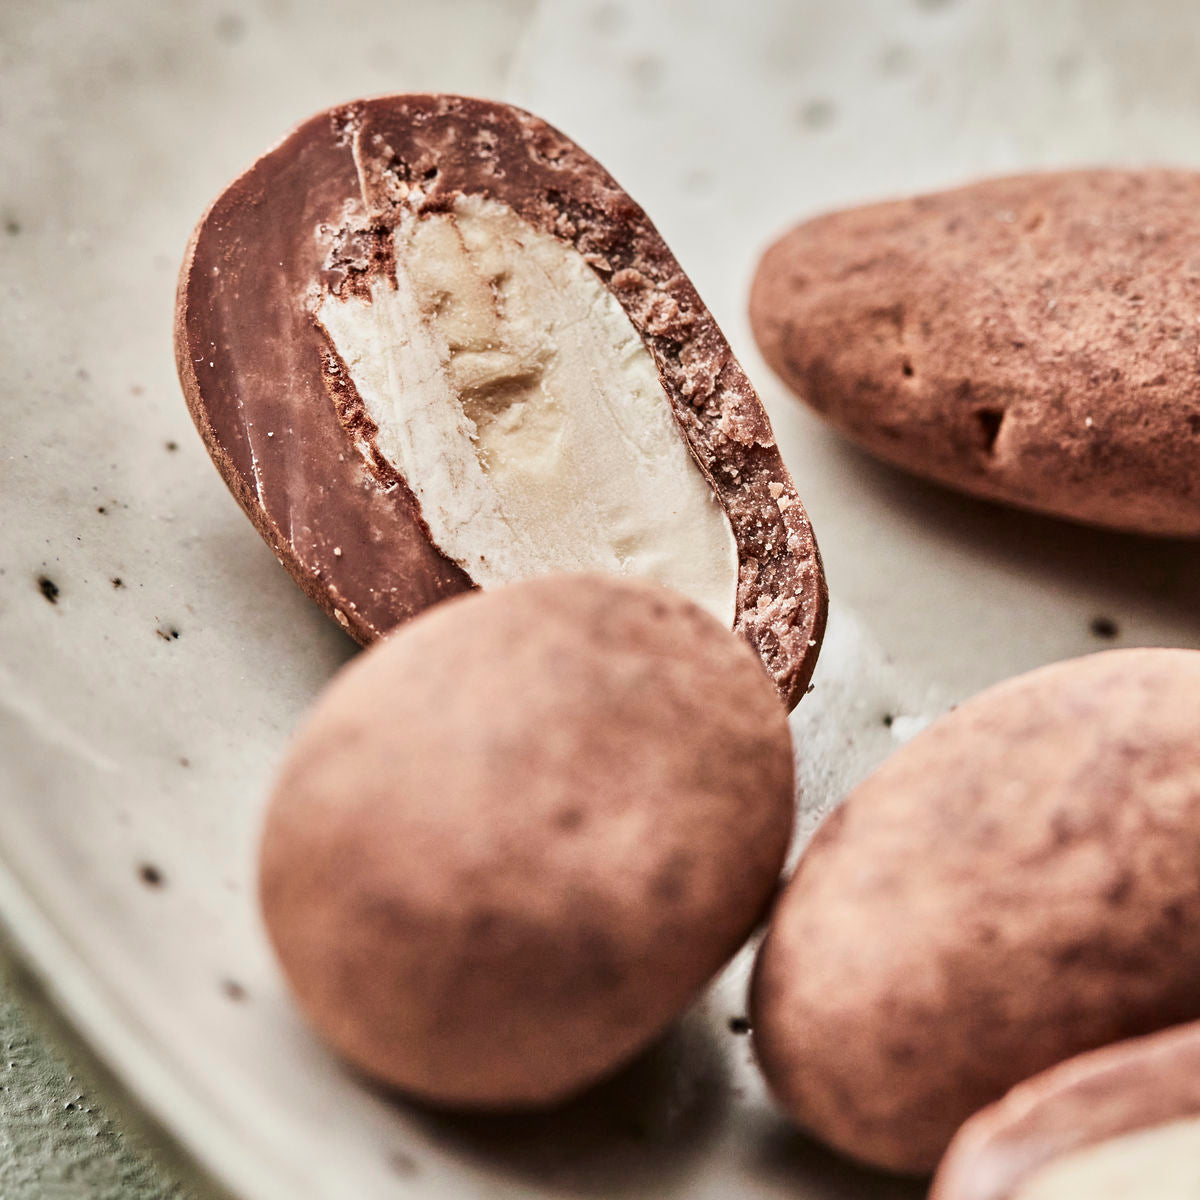 Chocolate Covered Almonds, Cocoa